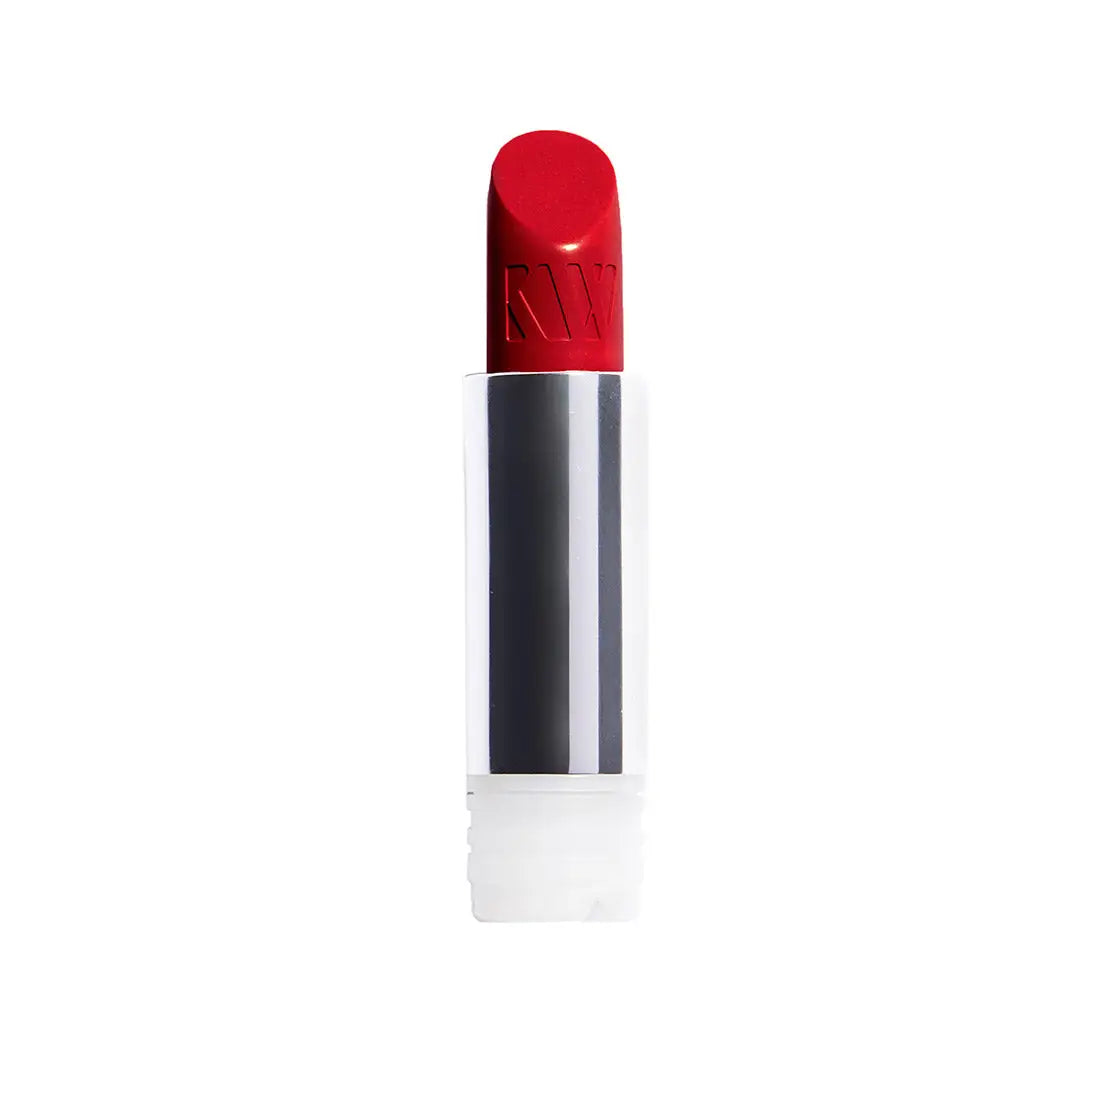 Kjaer Weis Lipstick Refill - KW Red Free Shipping Worldwide